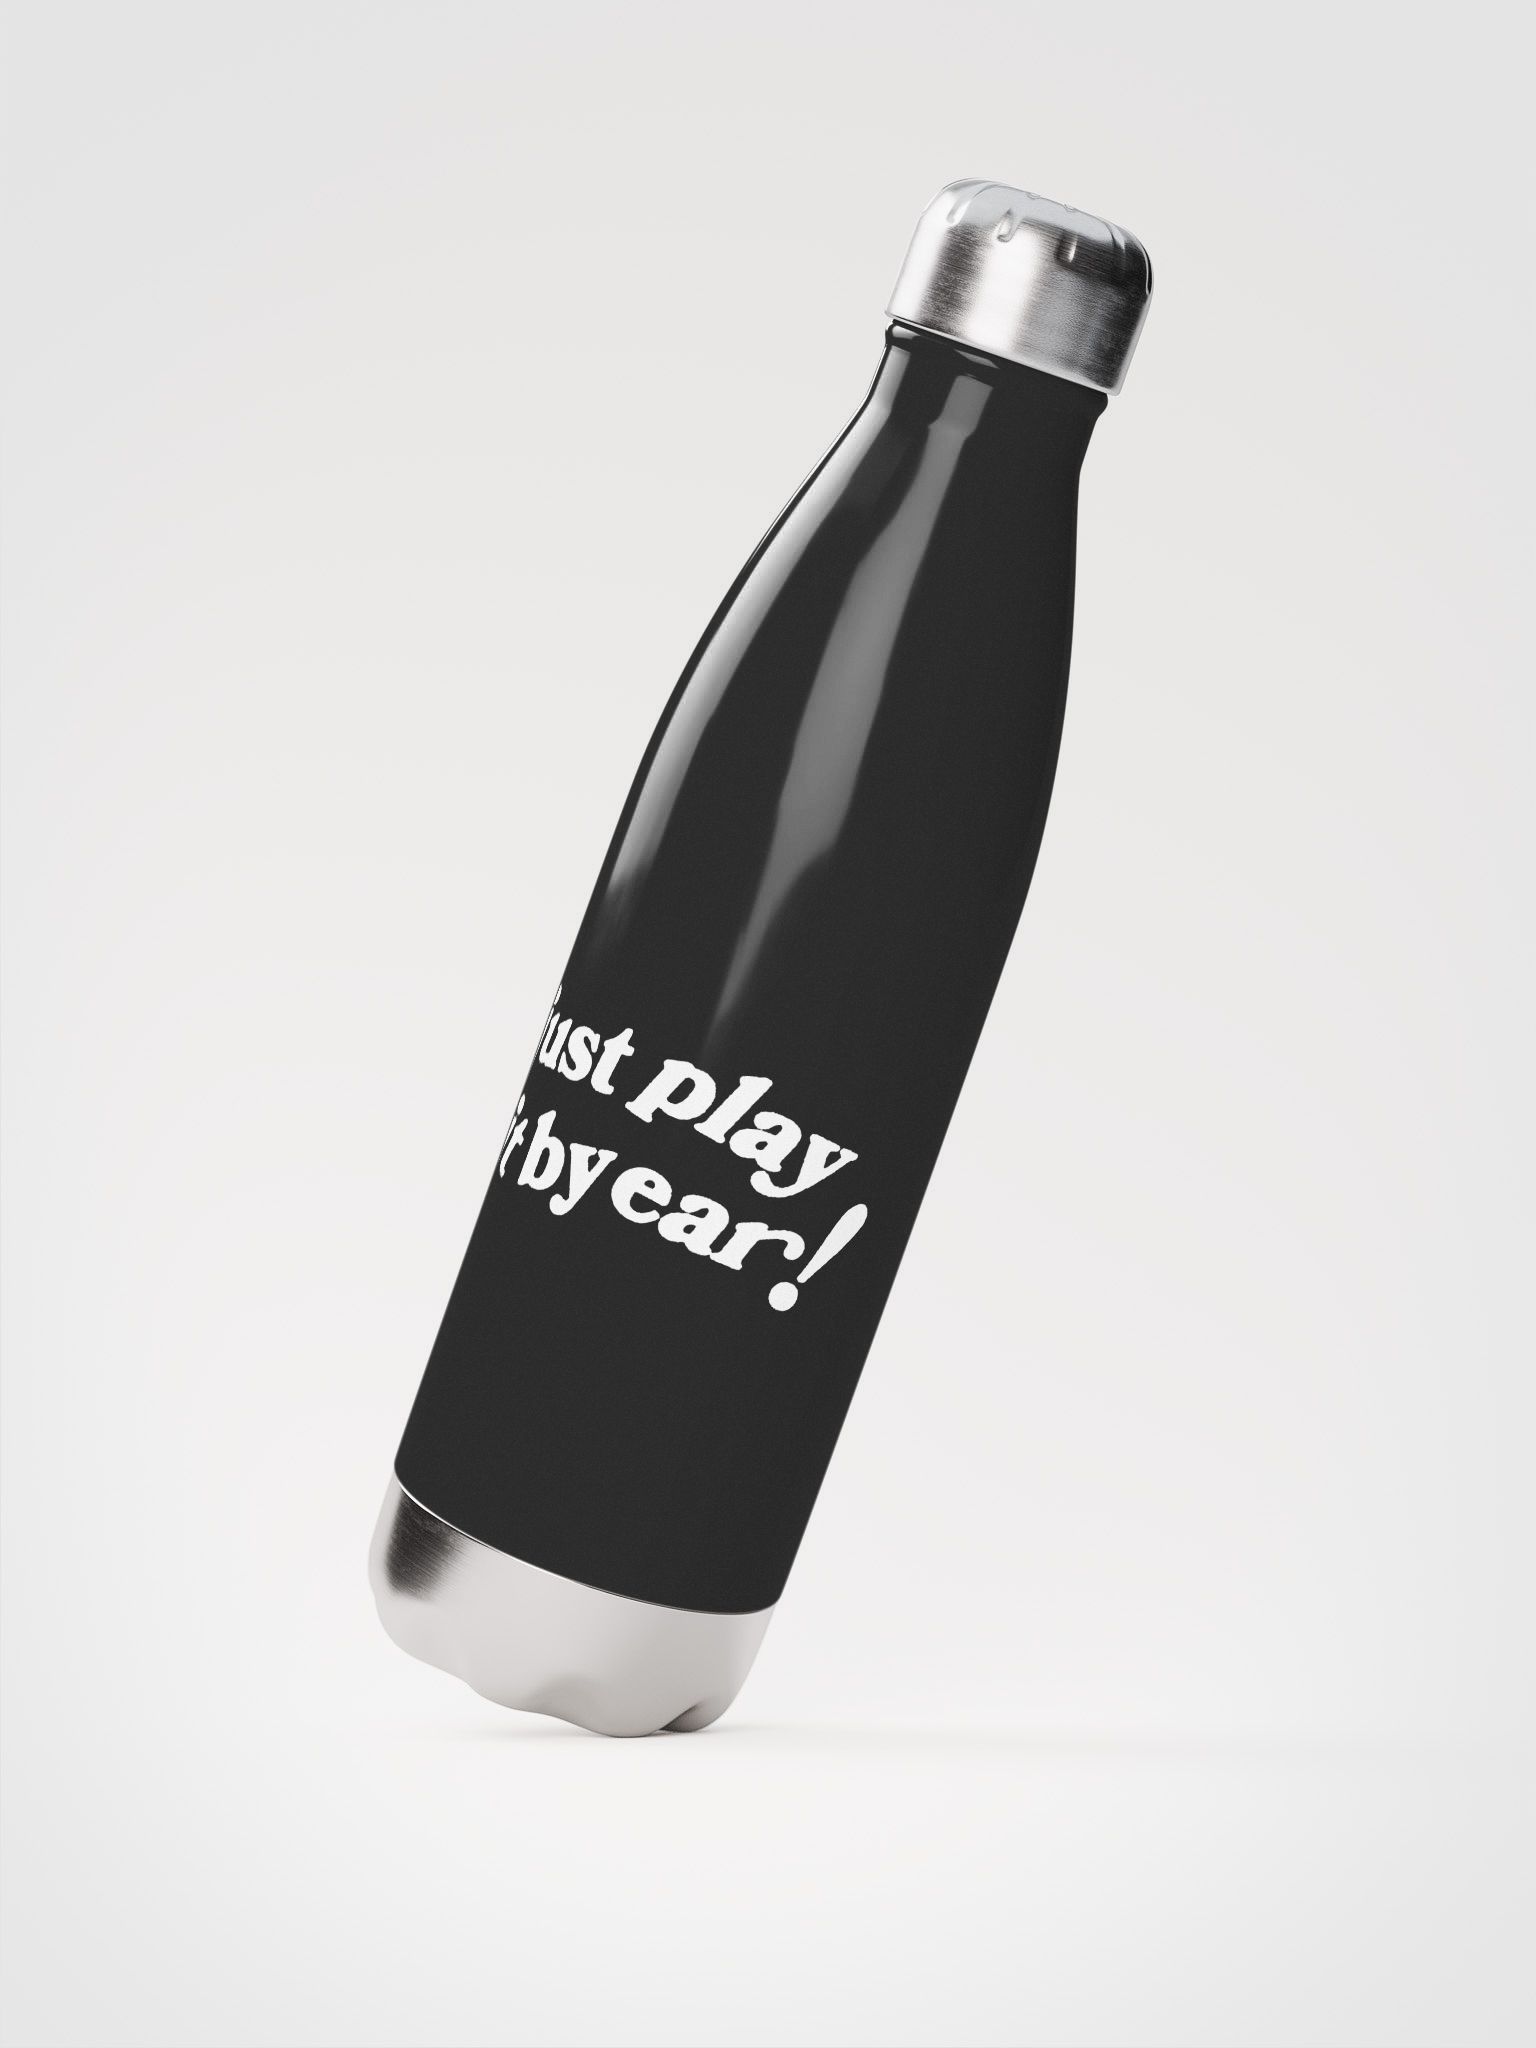 DEARART 17oz Black Insulated Water Bottle No Straw, Vacuum Mug Stainless  Steel Keep Coffee Hot/Cold …See more DEARART 17oz Black Insulated Water